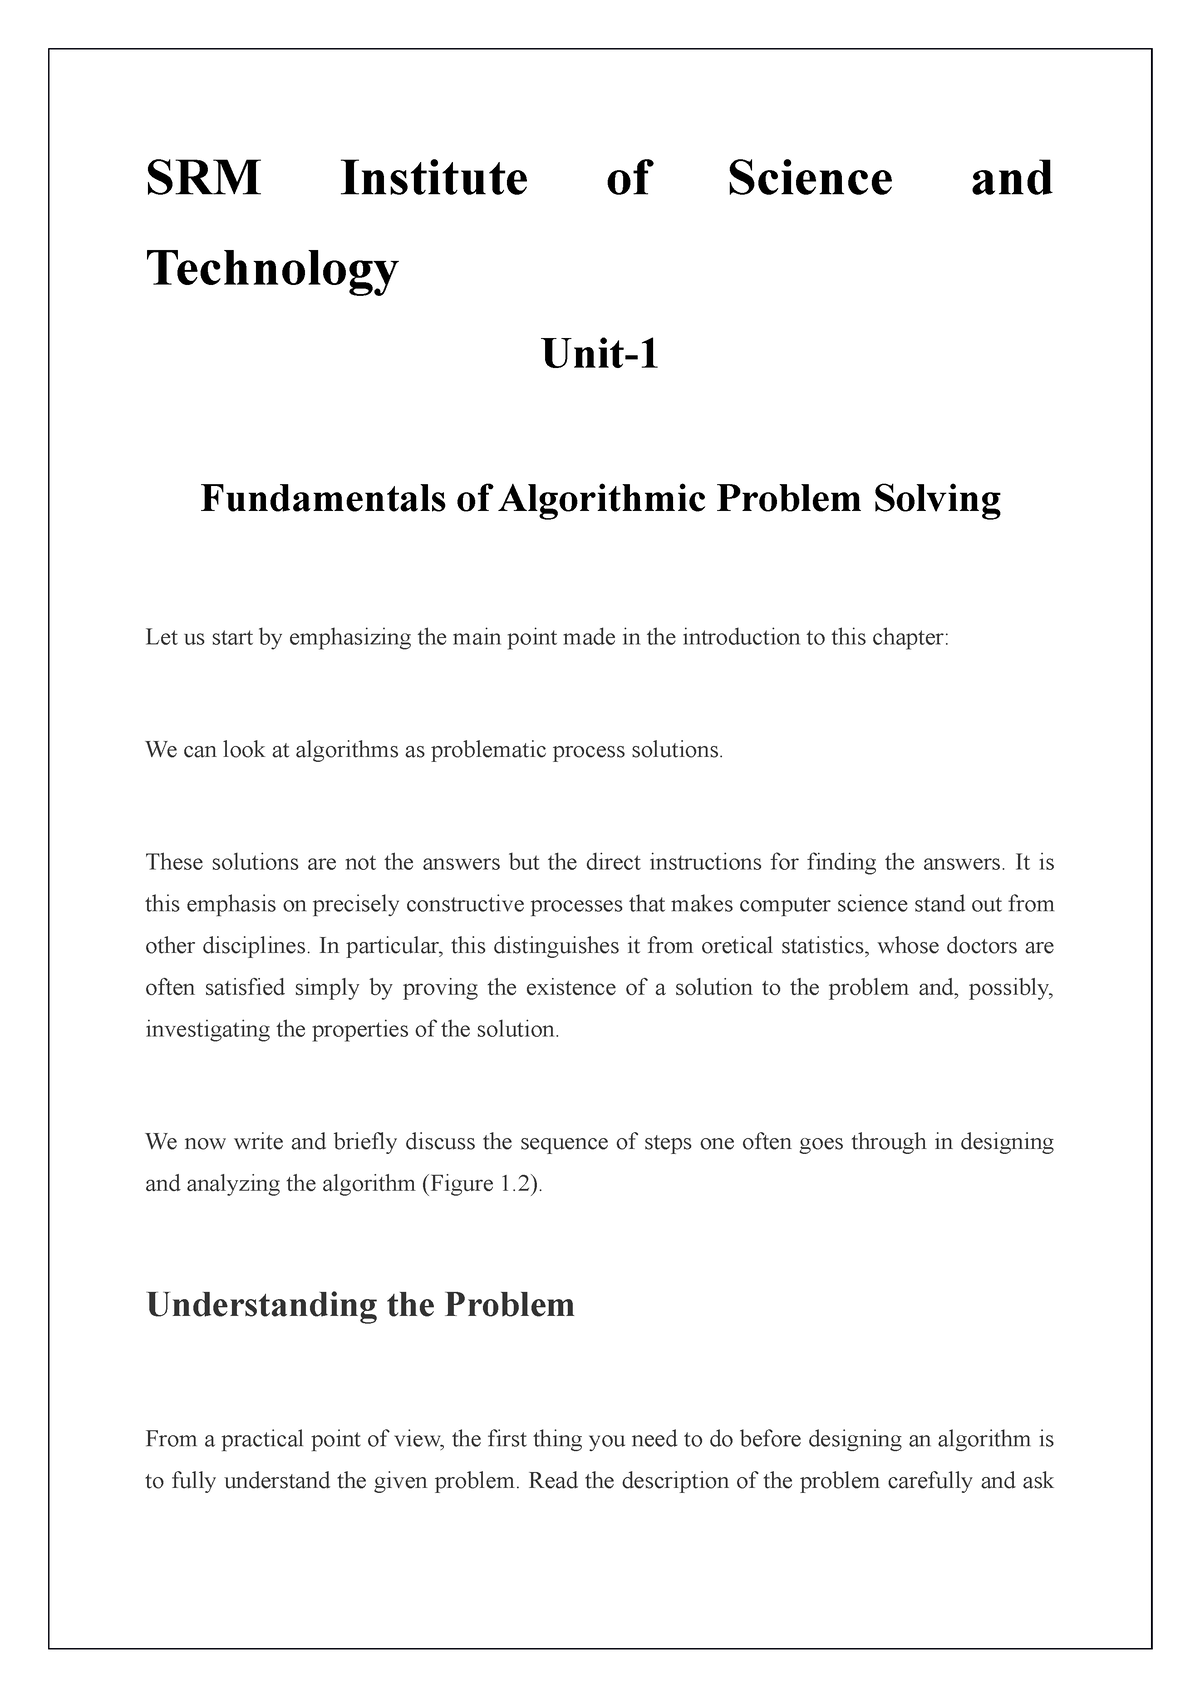 explain the fundamentals of algorithmic problem solving in detail